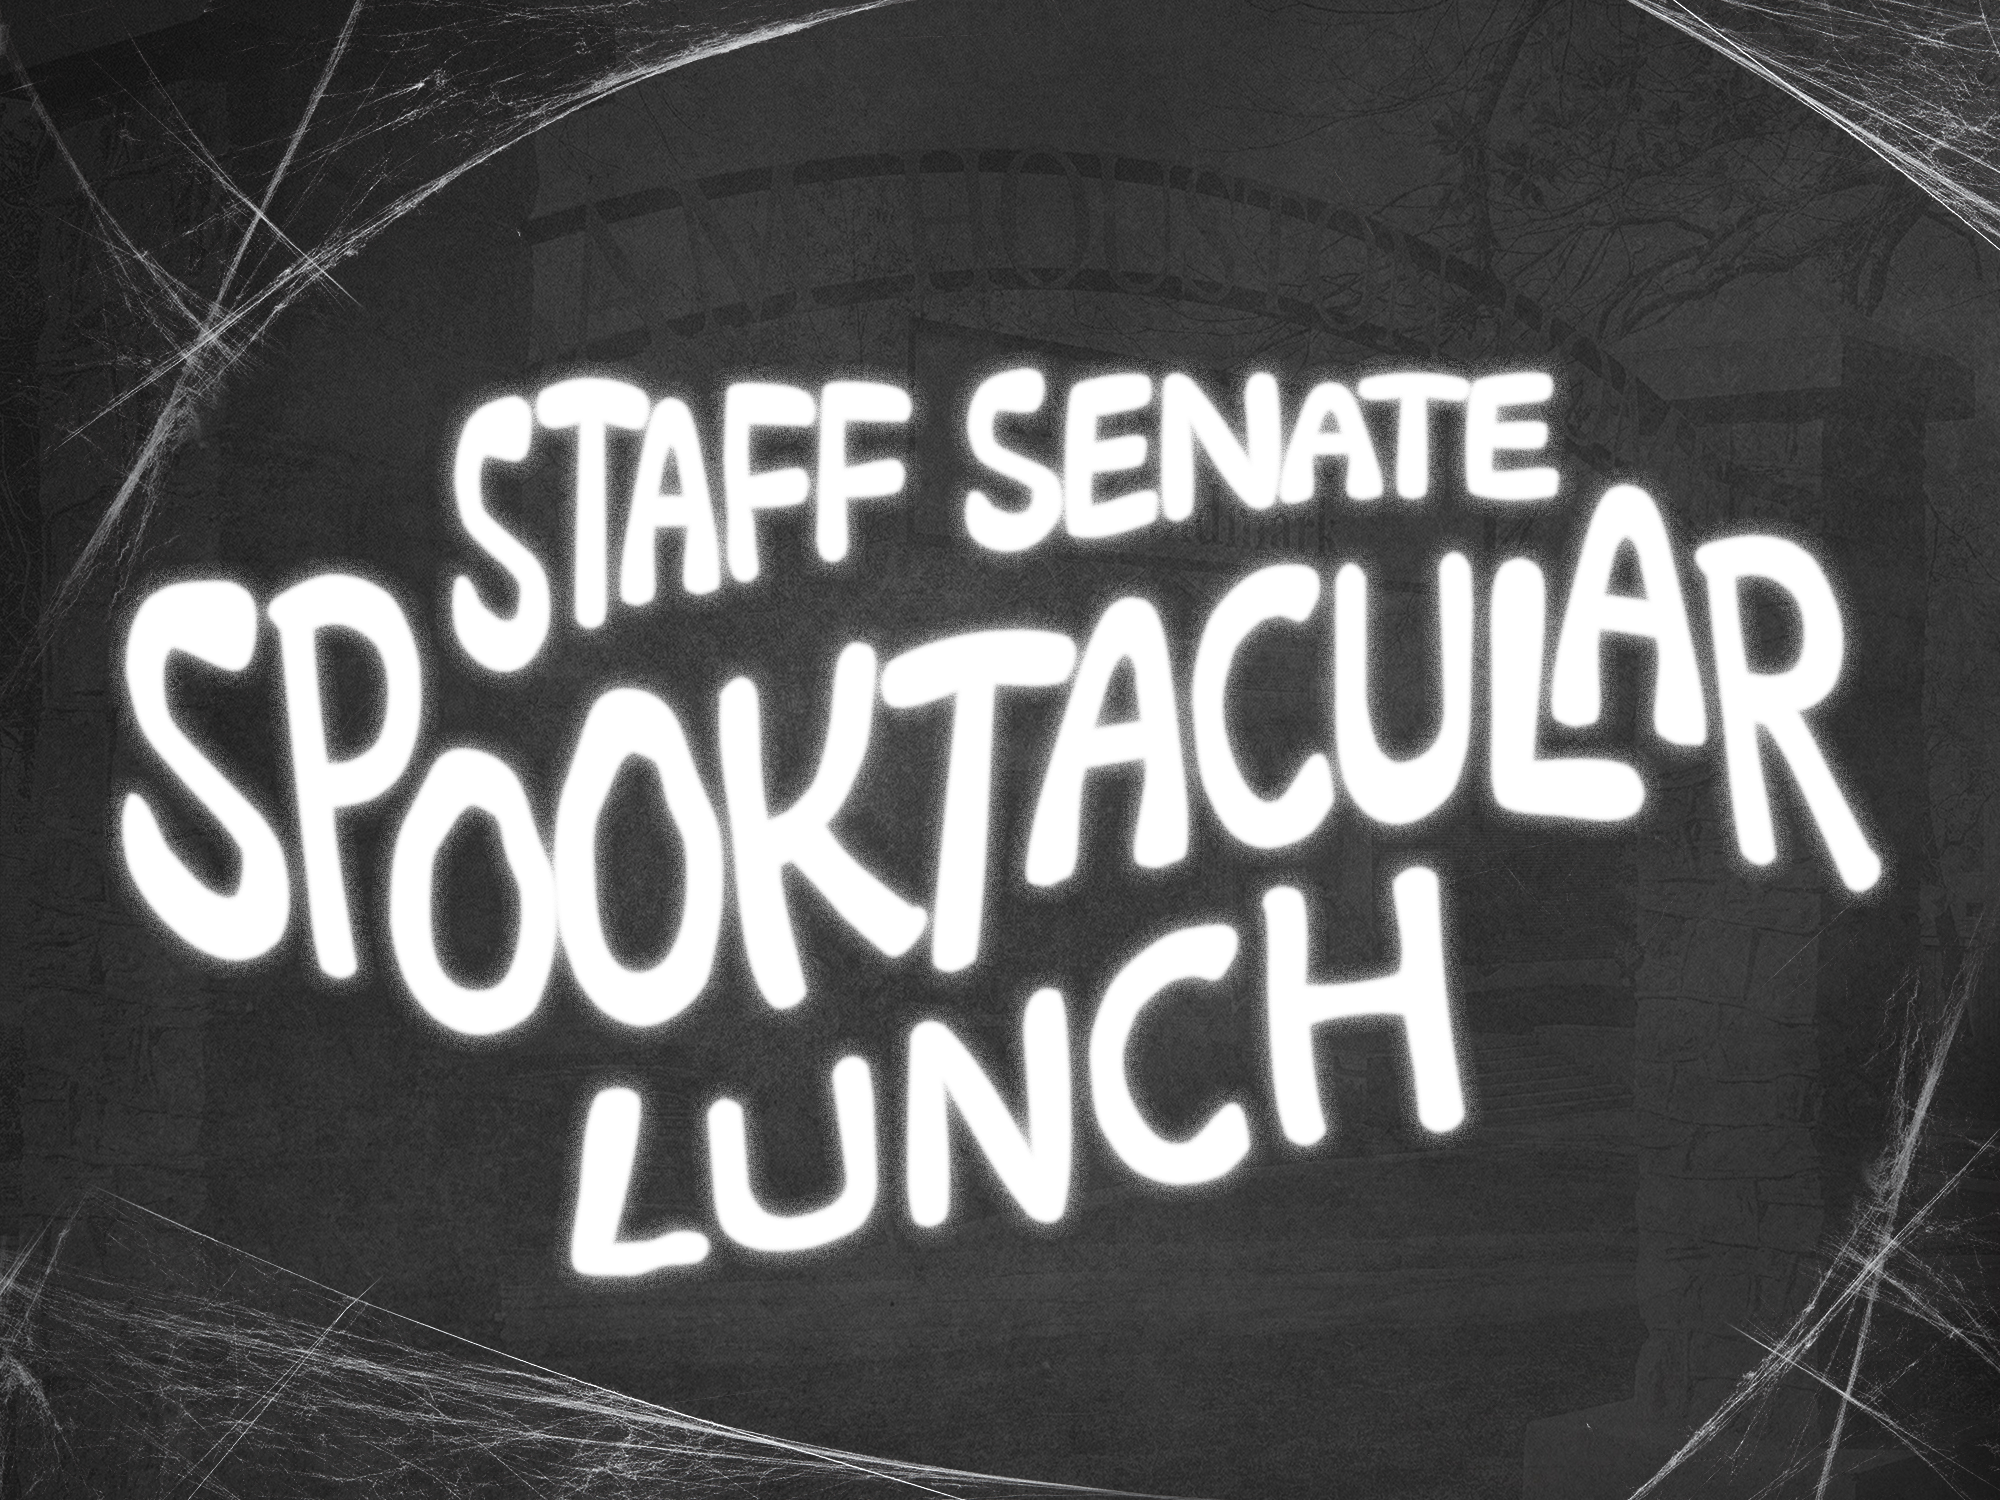 Staff Senate Spooktacular Lunch